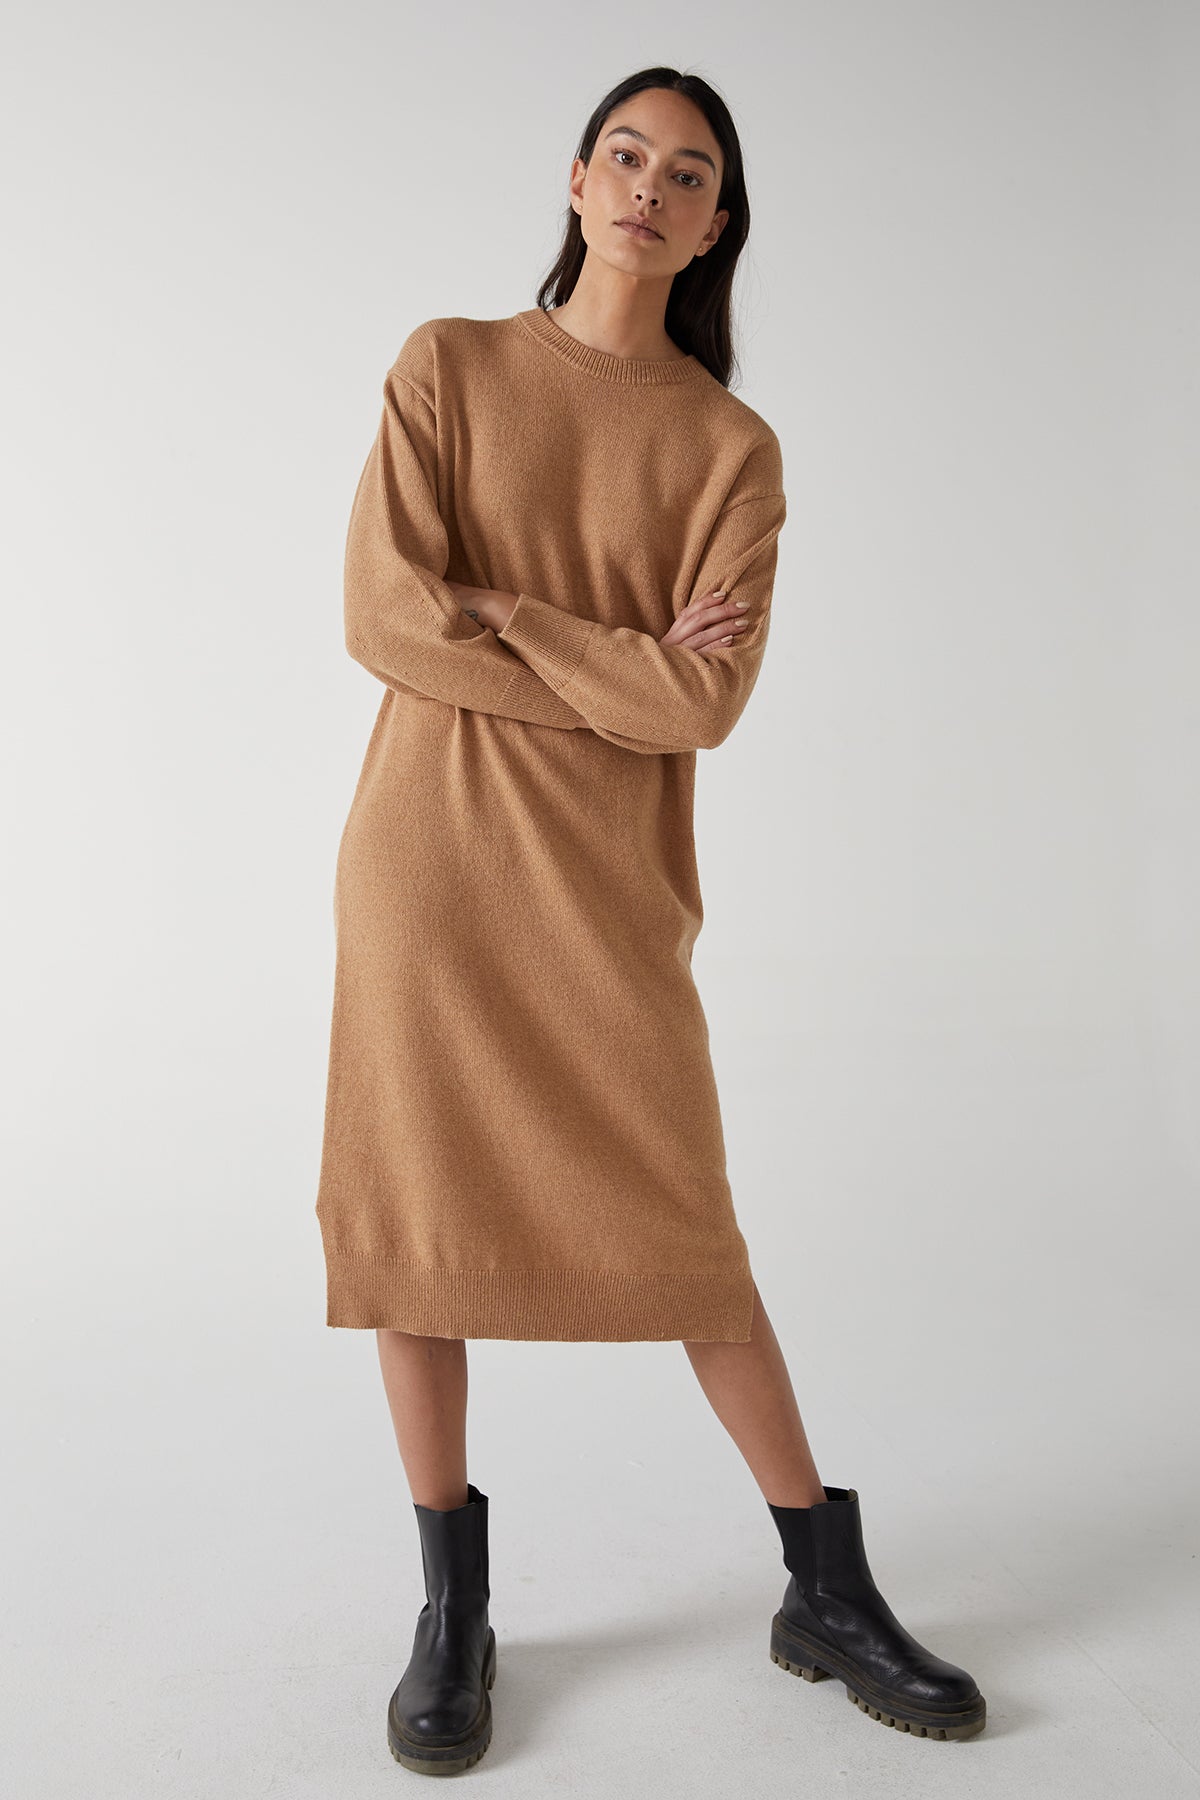 The model is wearing a Velvet by Jenny Graham LAUREL DRESS with side hem slits.-25315843735745